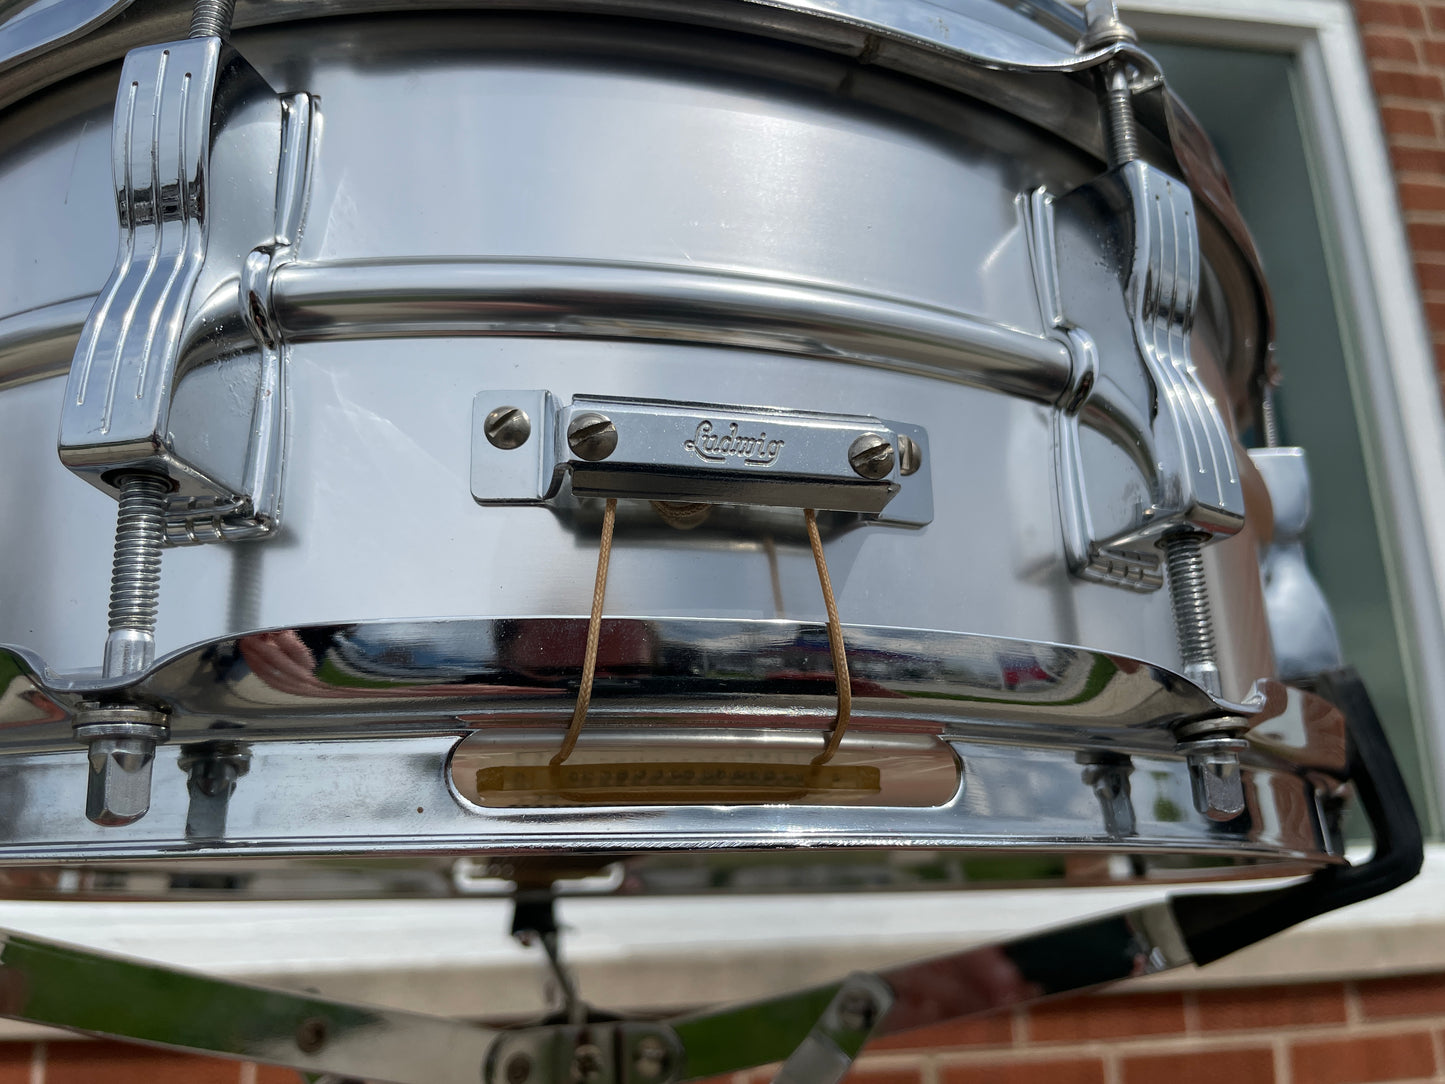 1965 Ludwig 5x14 No. 404 Acrolite Snare Drum